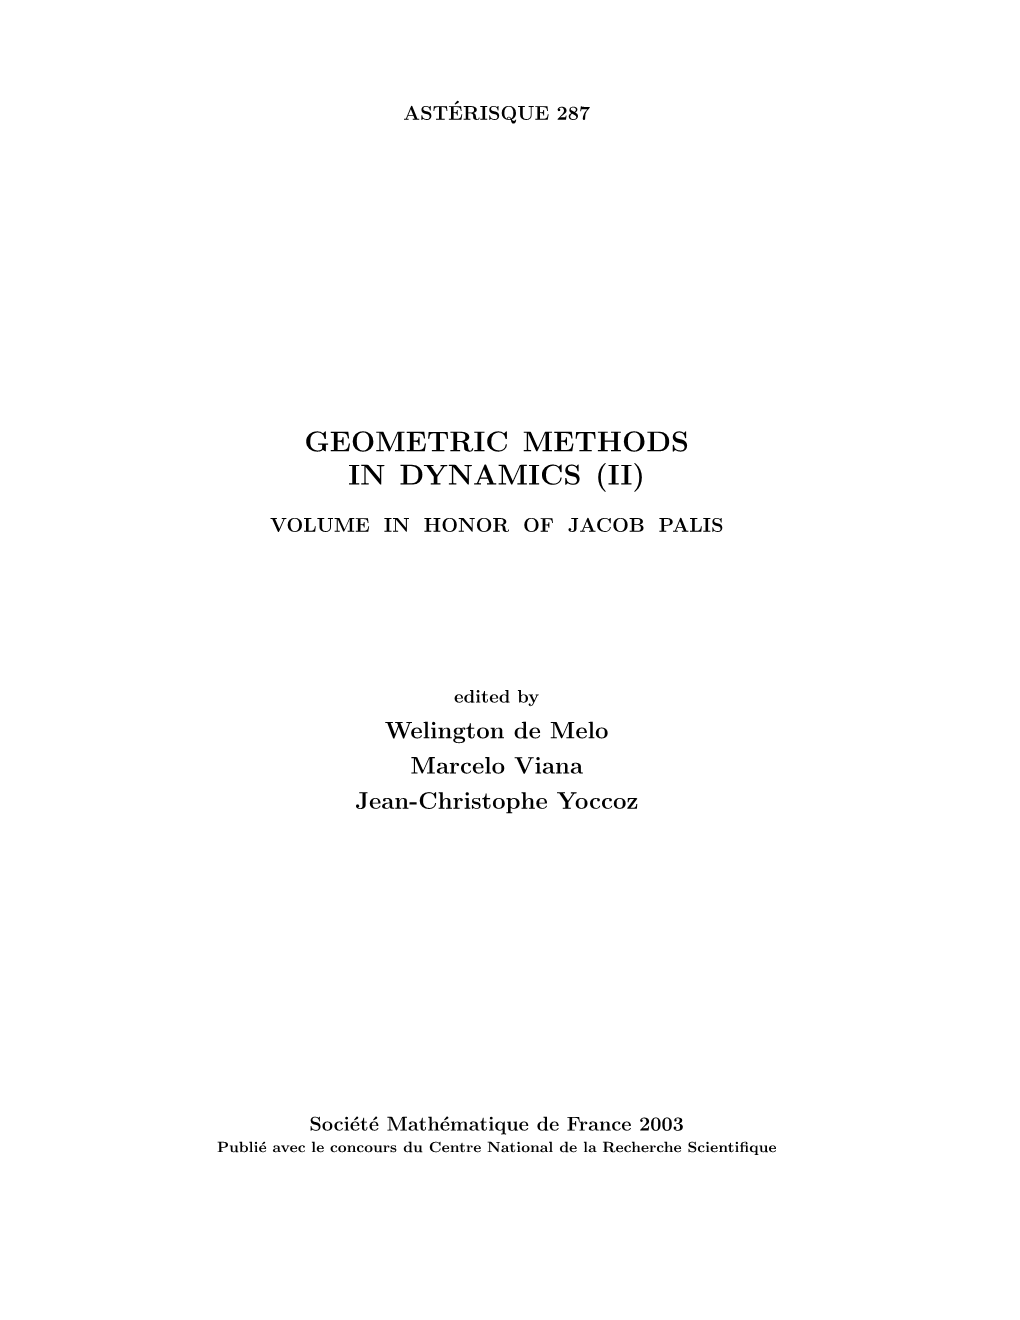 Geometric Methods in Dynamics (Ii)